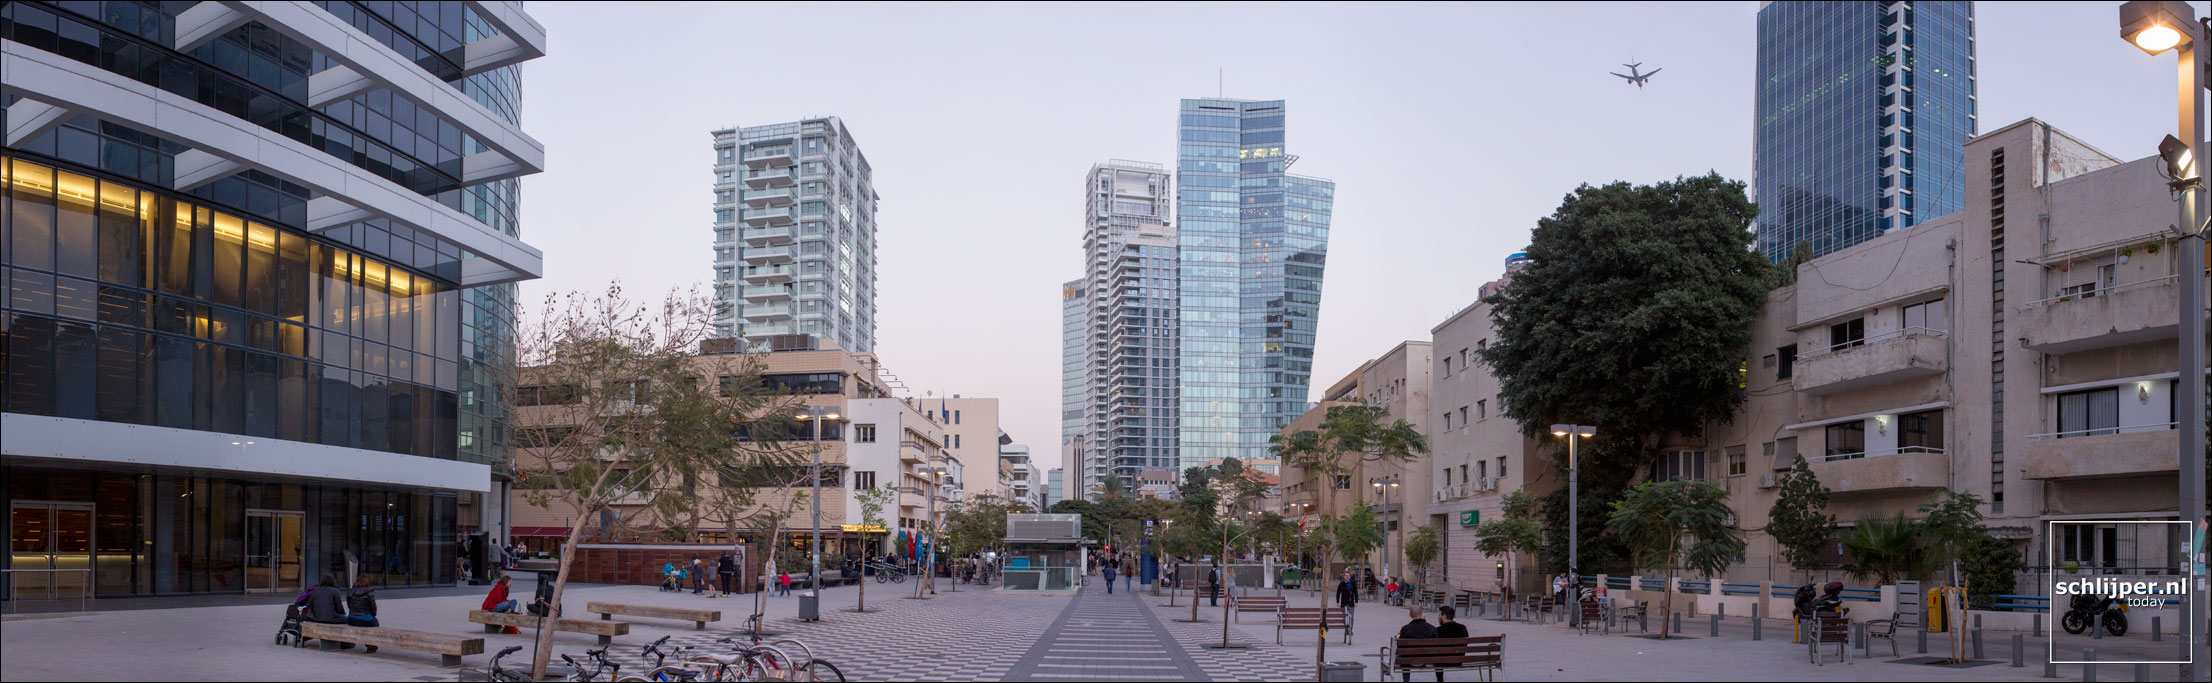 Israel, Tel Aviv, 26 november 2016